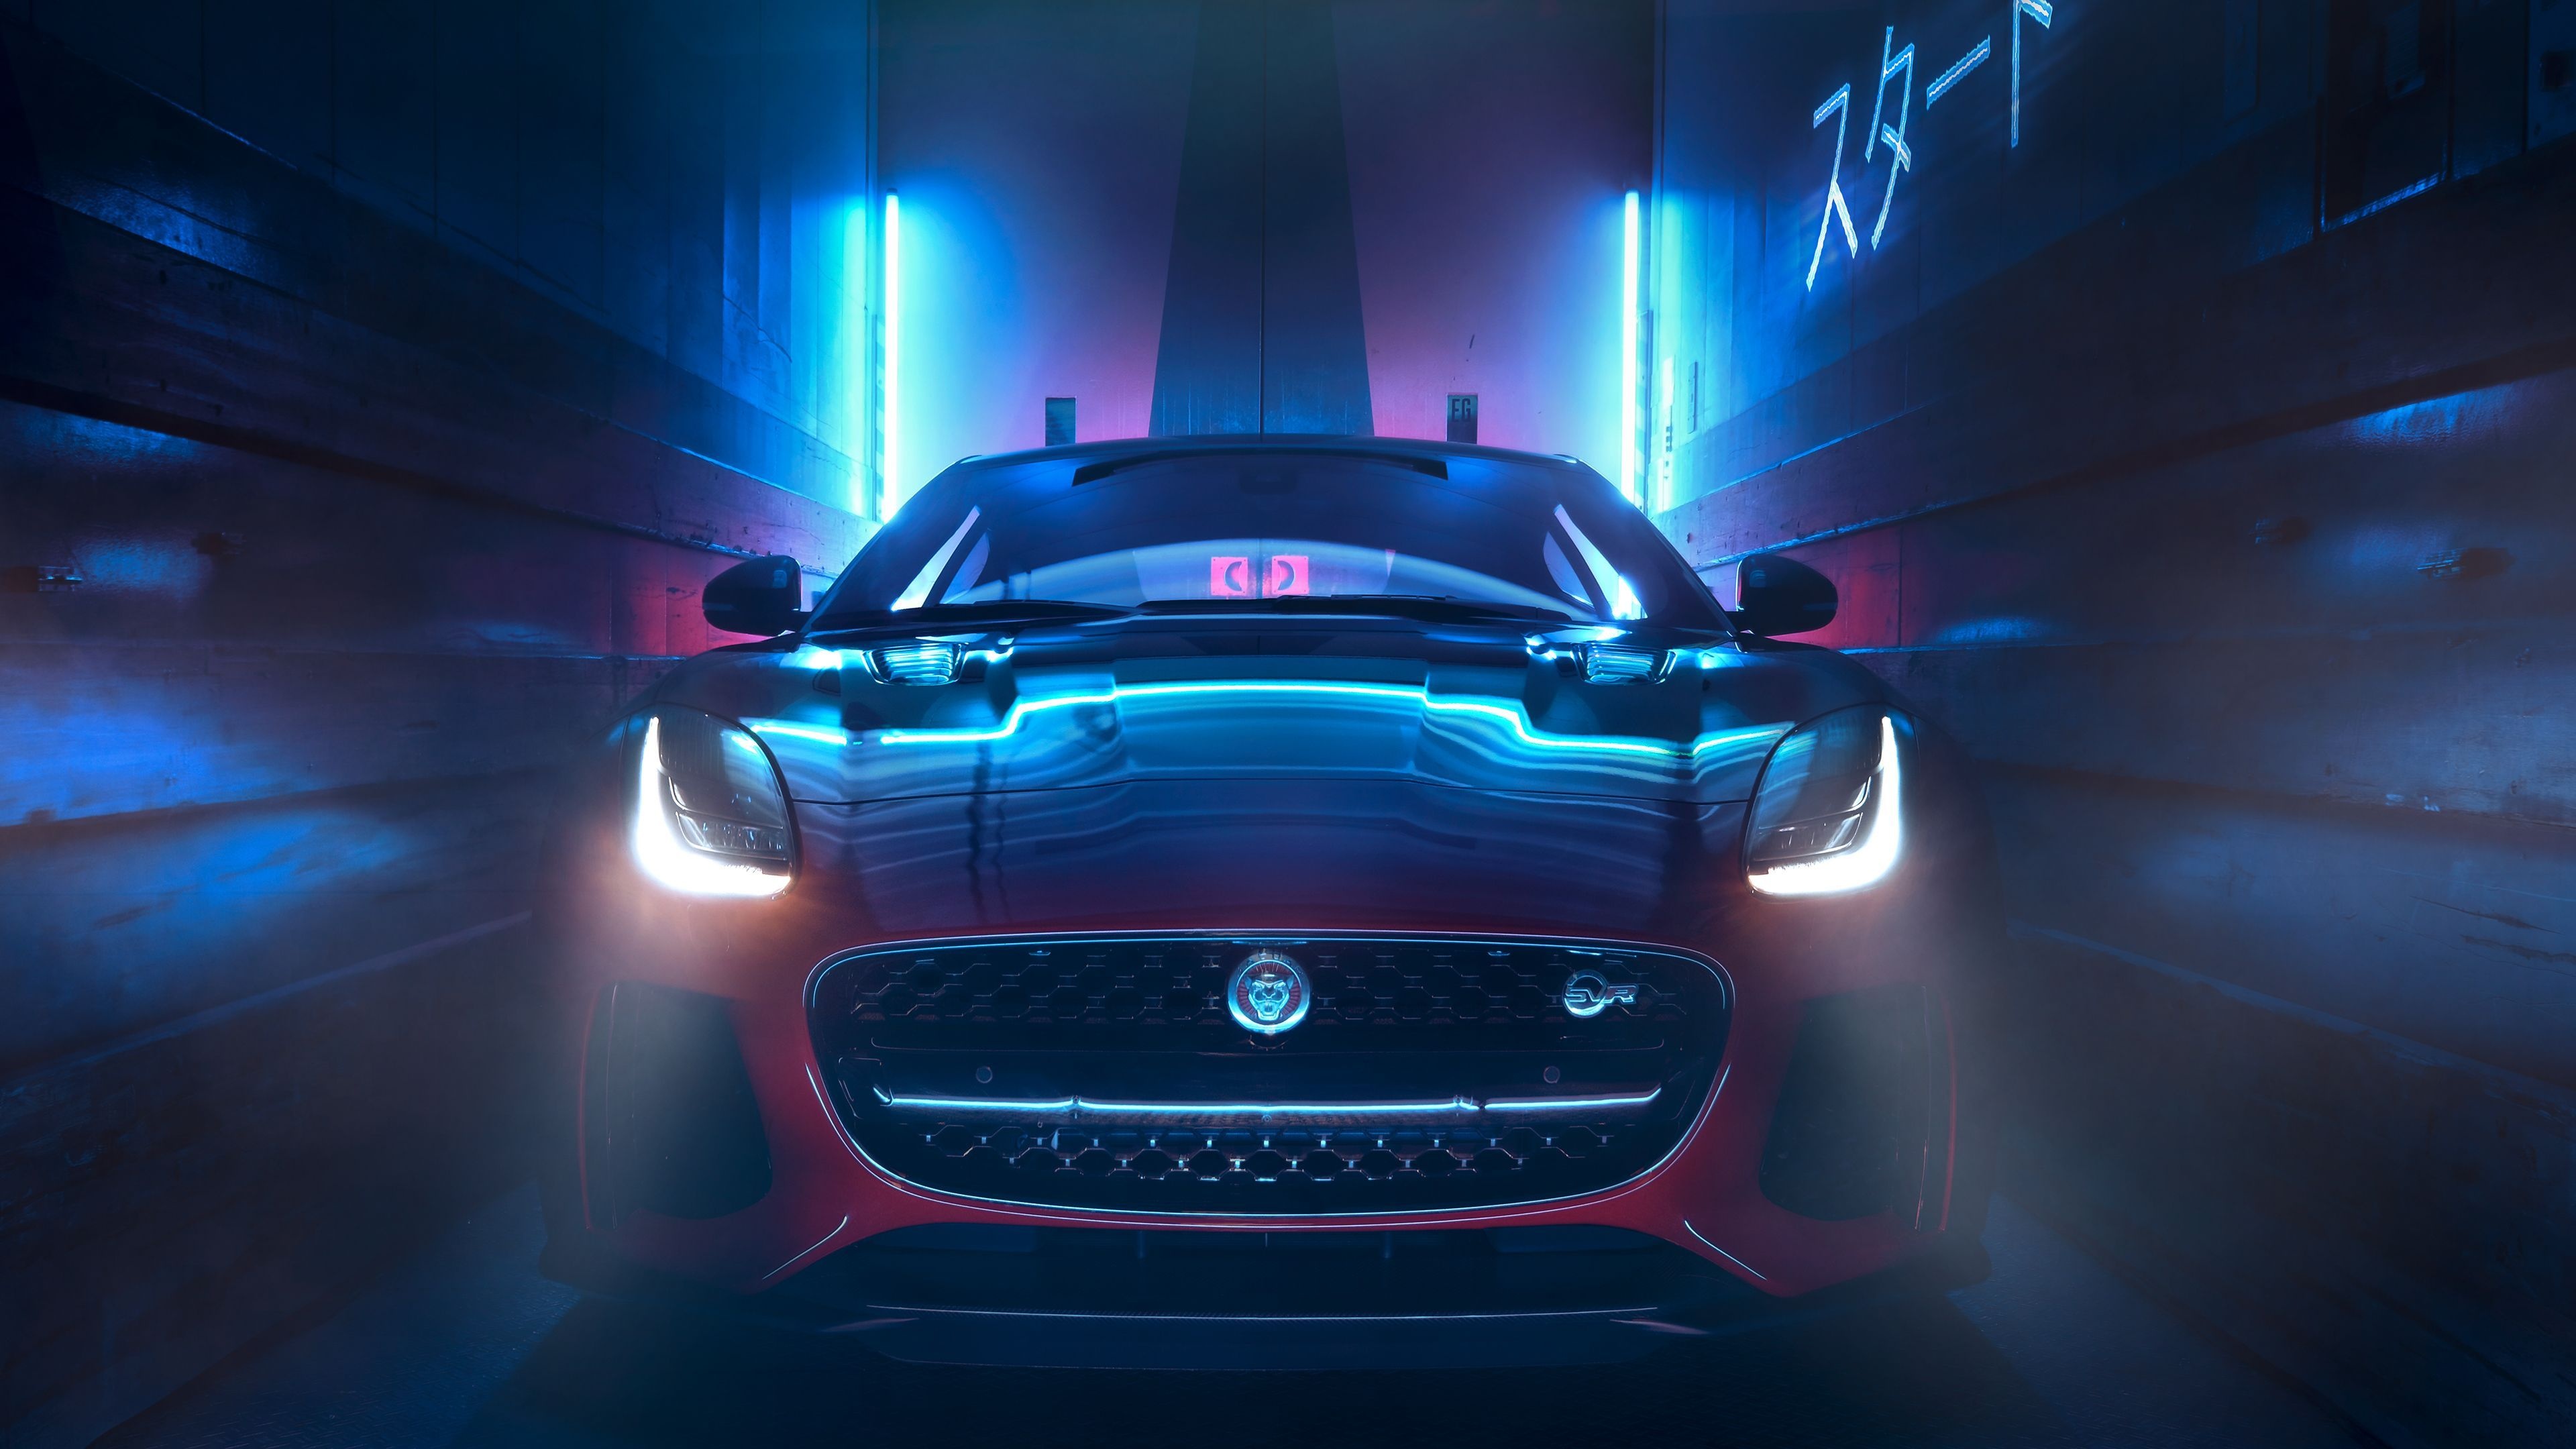 Jaguar F-TYPE, Stunning front view, High definition wallpapers, Car backgrounds, 3840x2160 4K Desktop